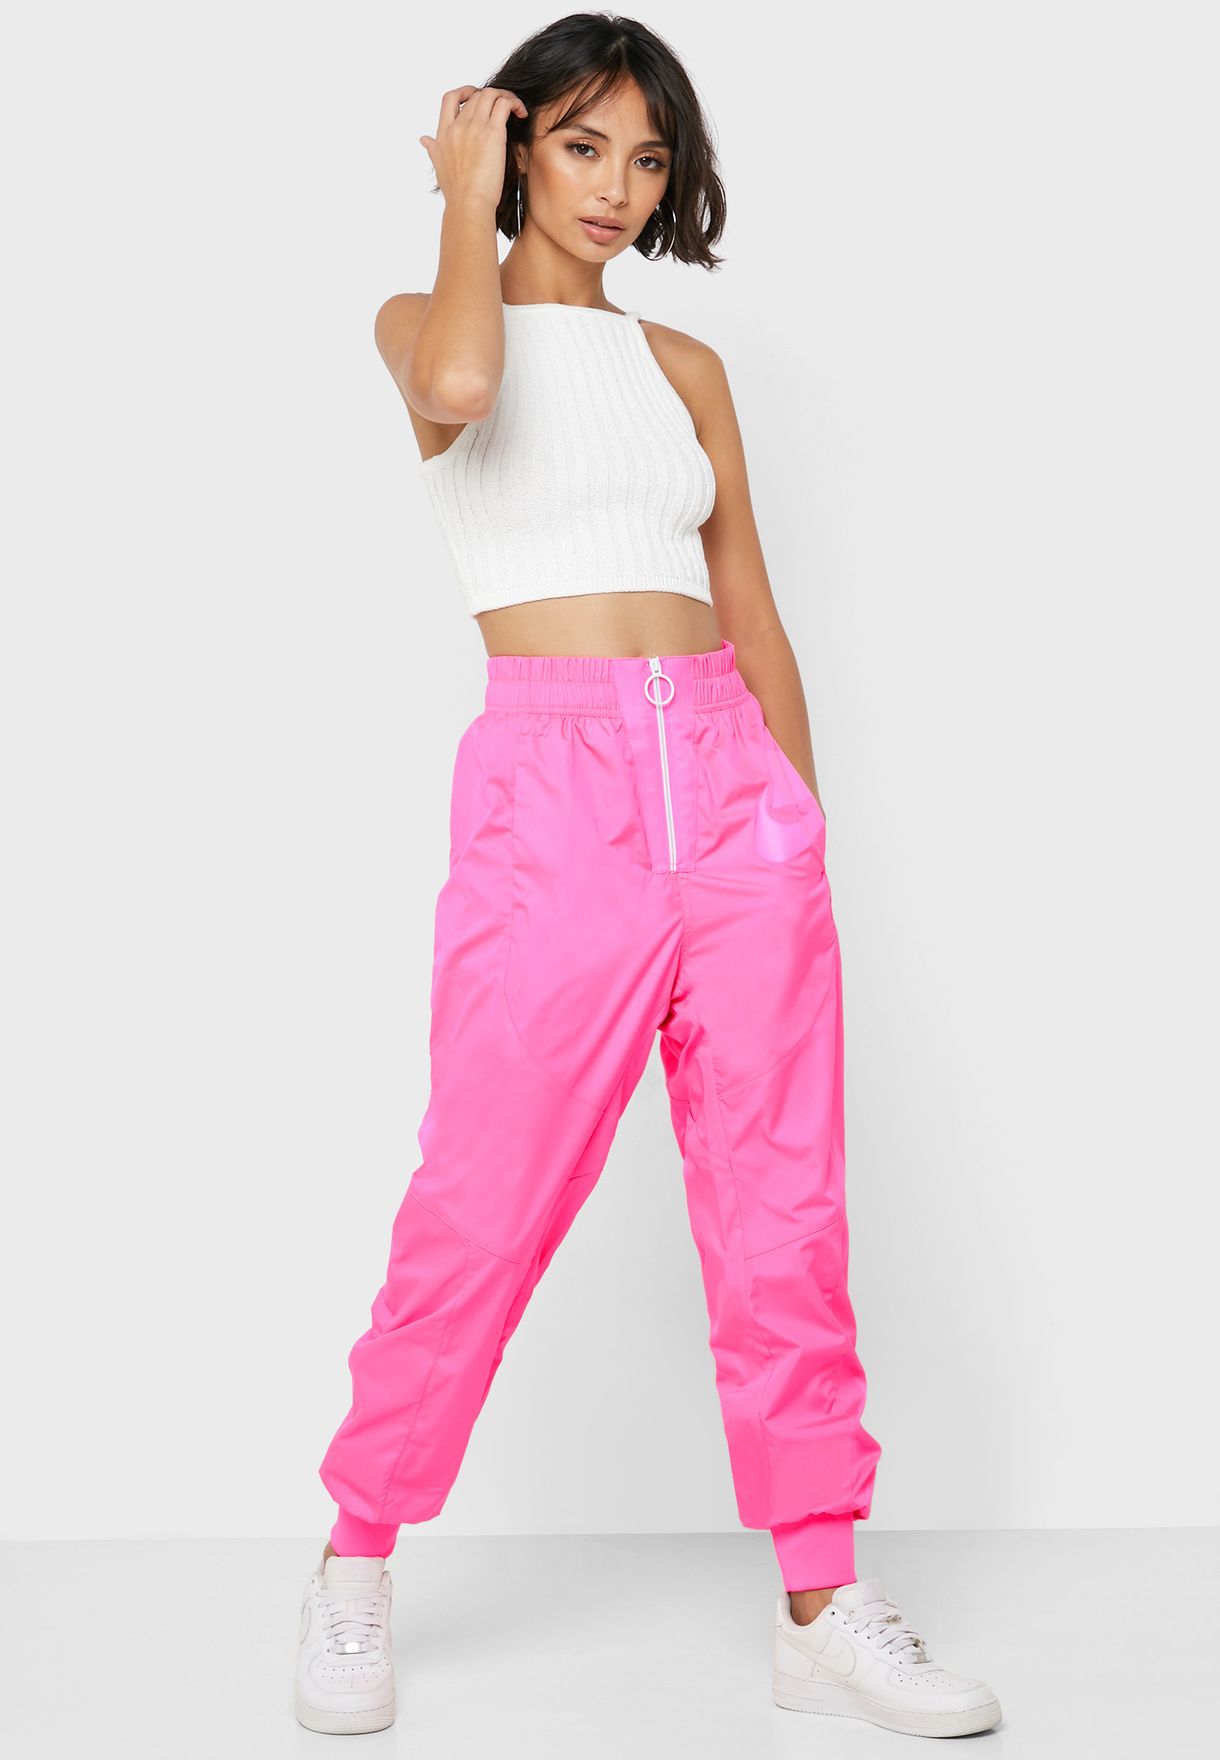 nike high waisted pink cargo pants